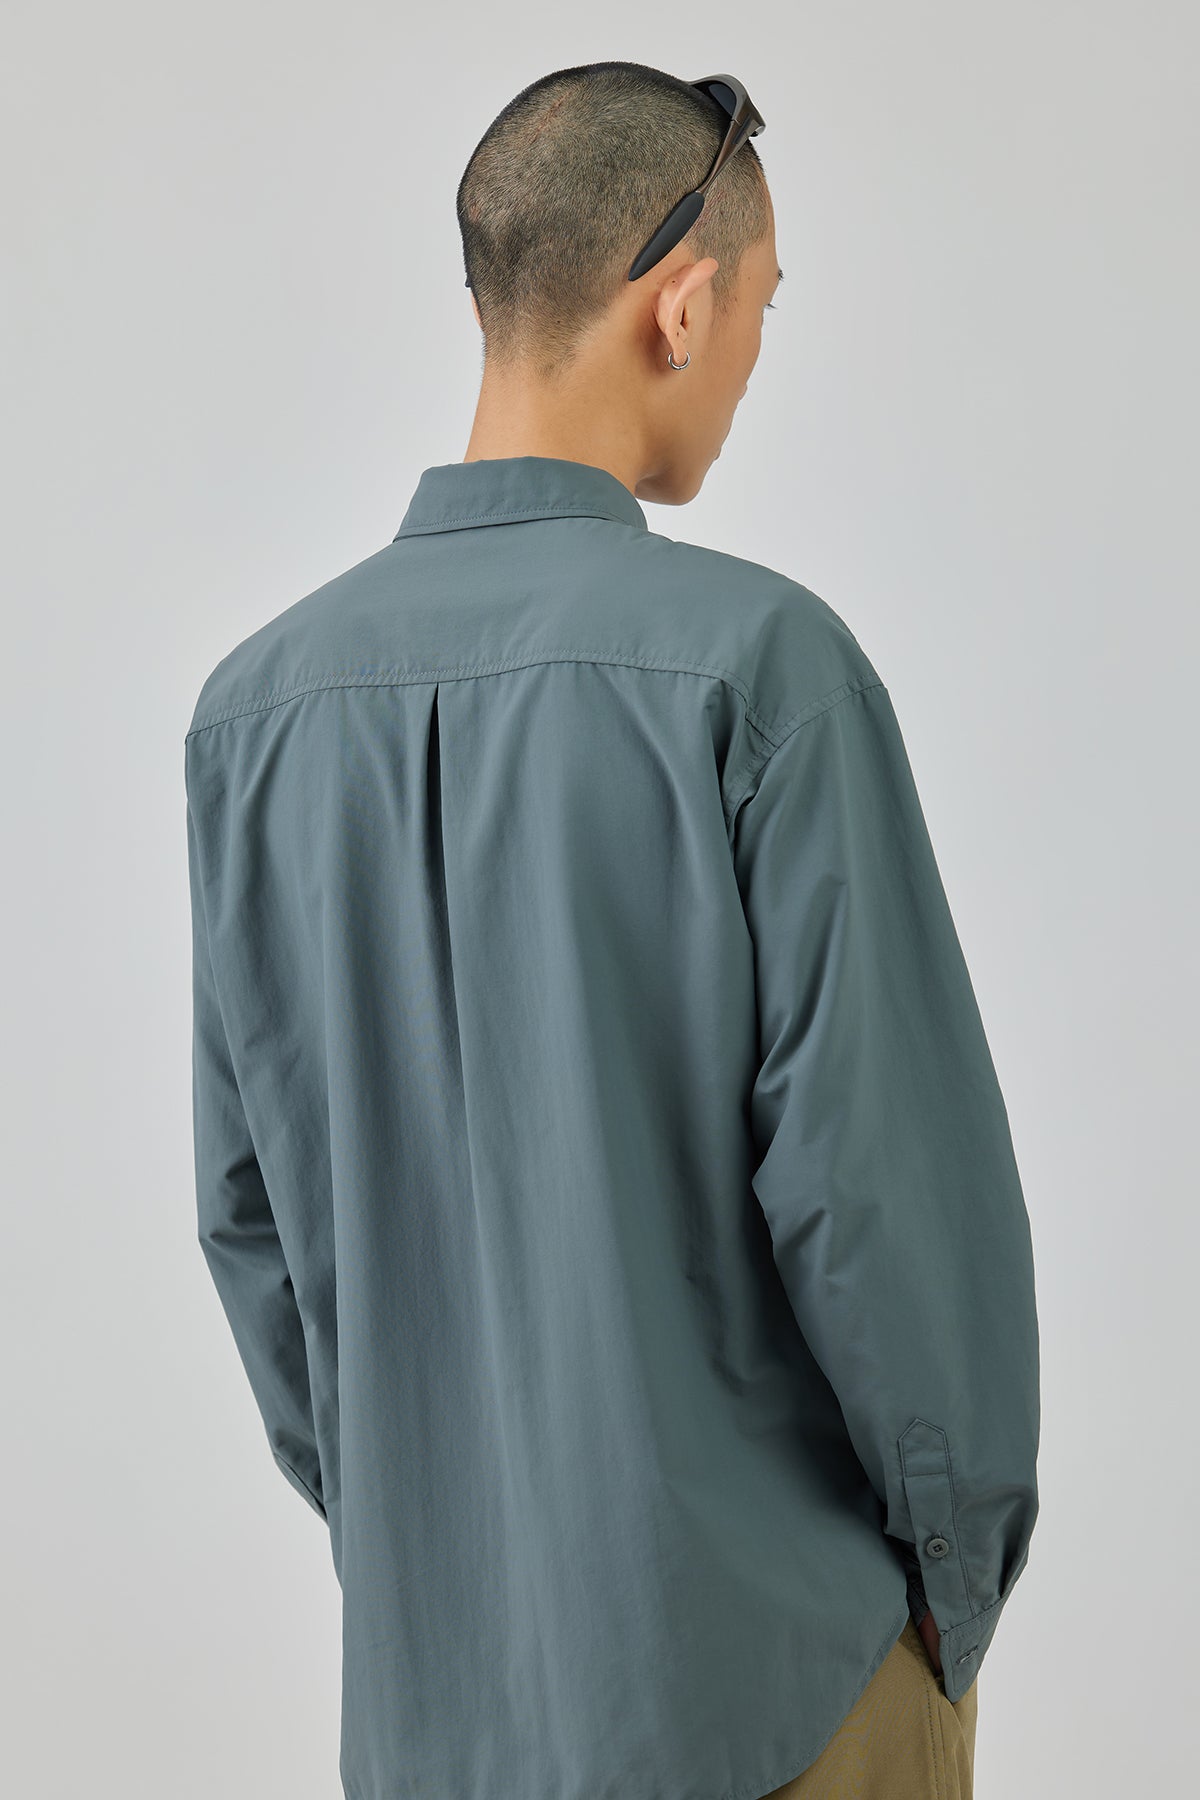 Green Drab Multi-Pocket Shirt